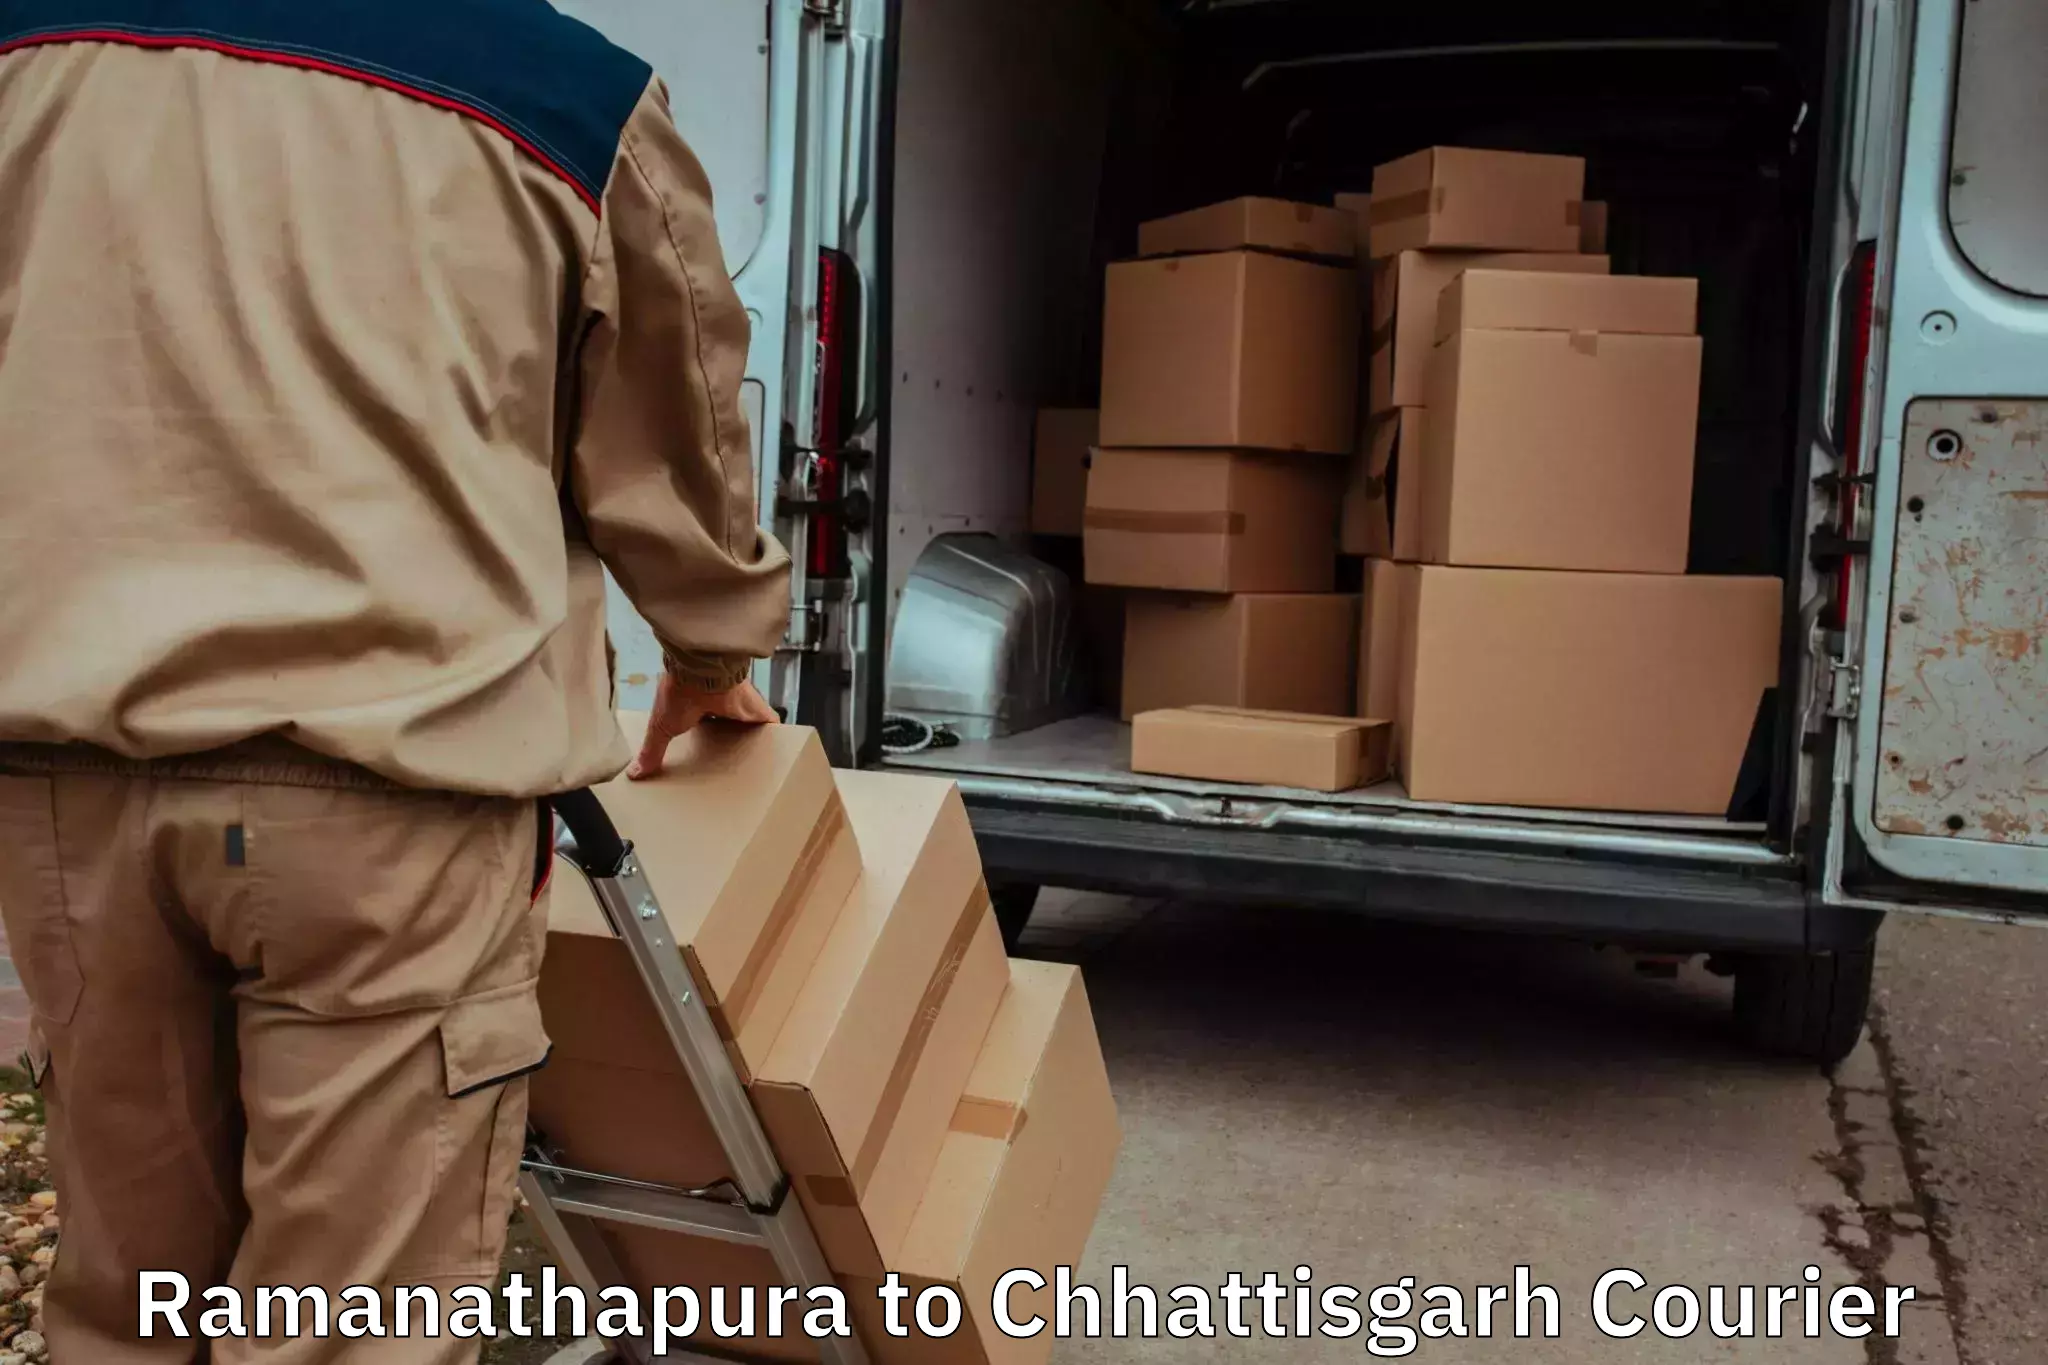 Trusted relocation experts Ramanathapura to Chhattisgarh